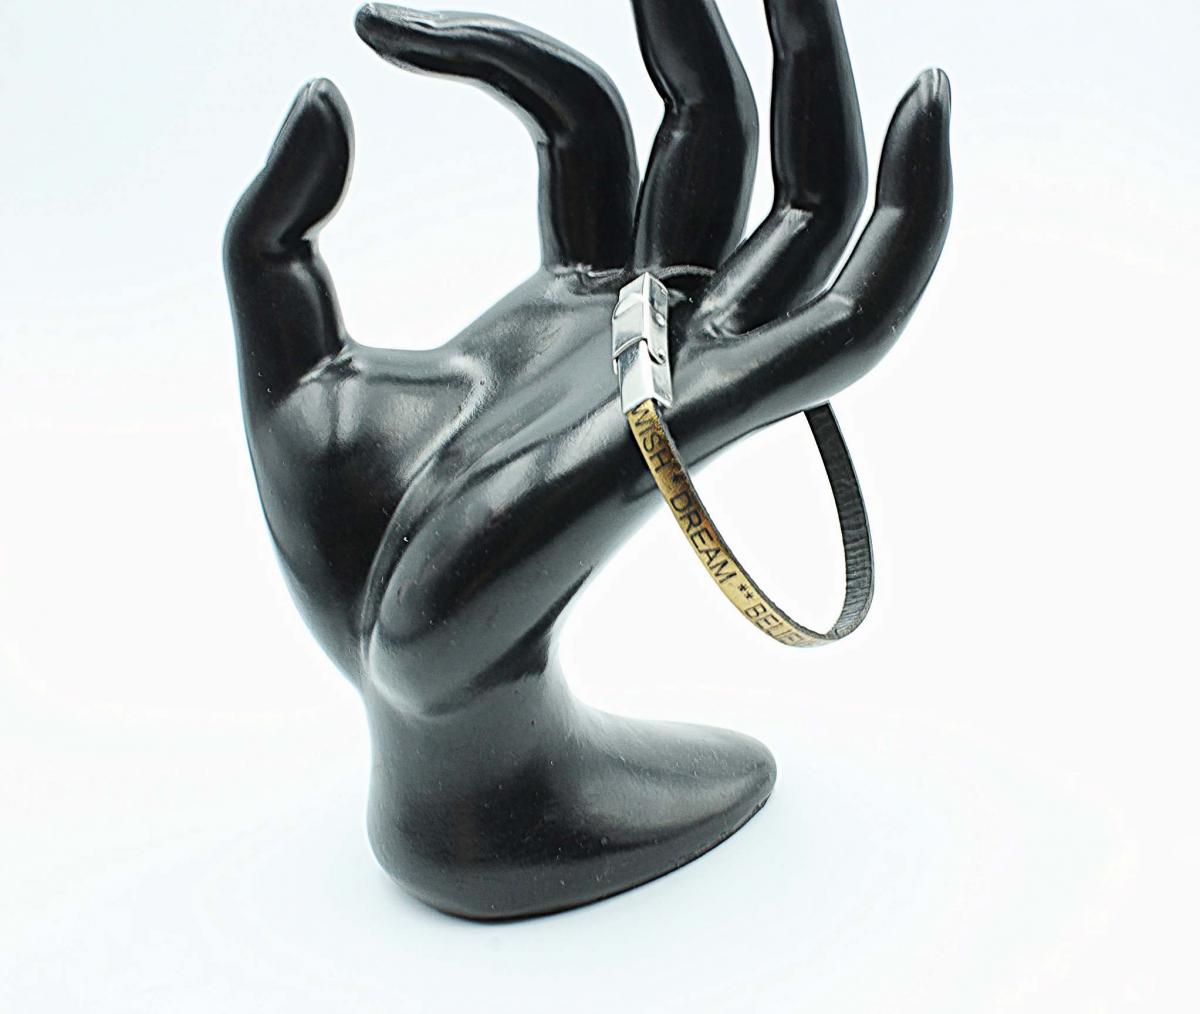 Inspirational Mantra Bracelet Metallic Gold - Wish, Dream, Believe